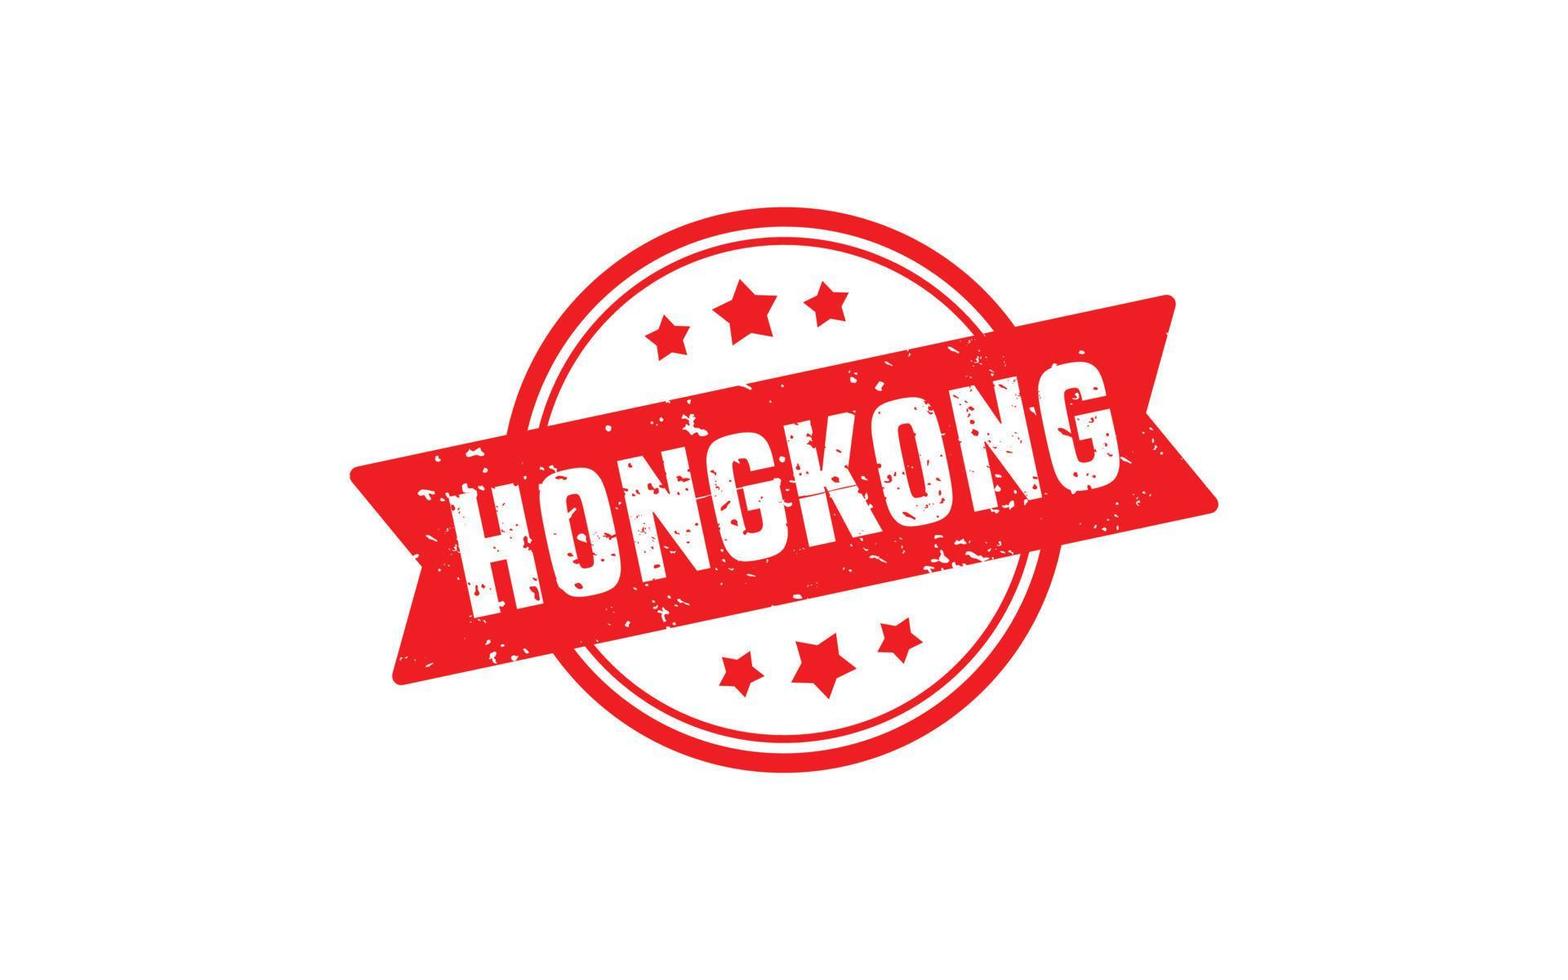 Hongkong postzegel rubber met grunge stijl Aan wit achtergrond vector